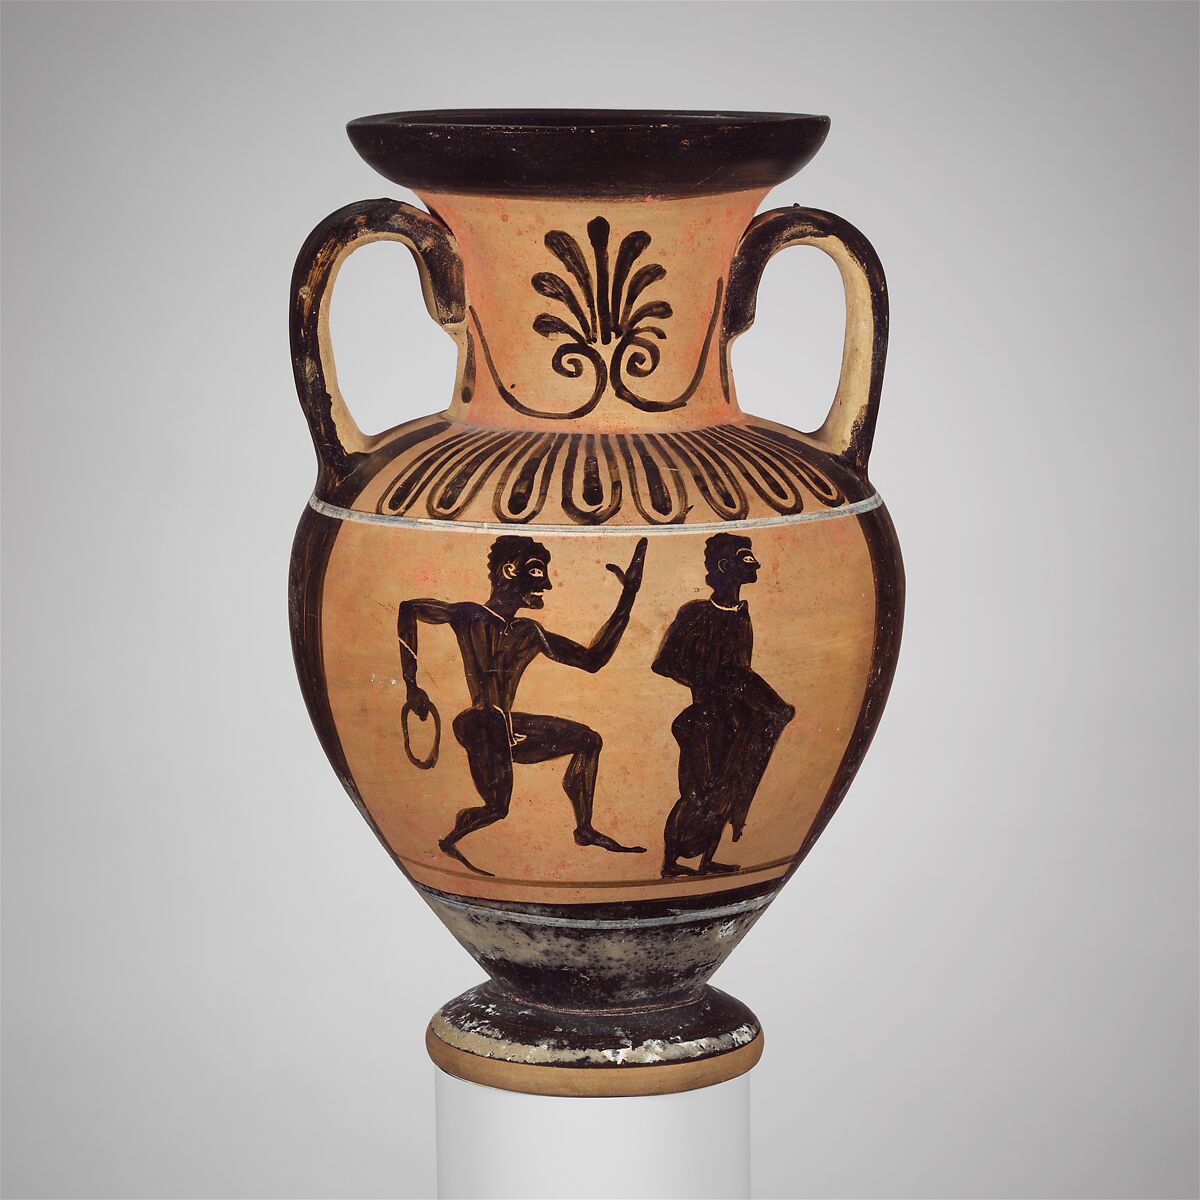 Terracotta neck-amphora (jar), Terracotta, Greek, South Italian, Campanian 